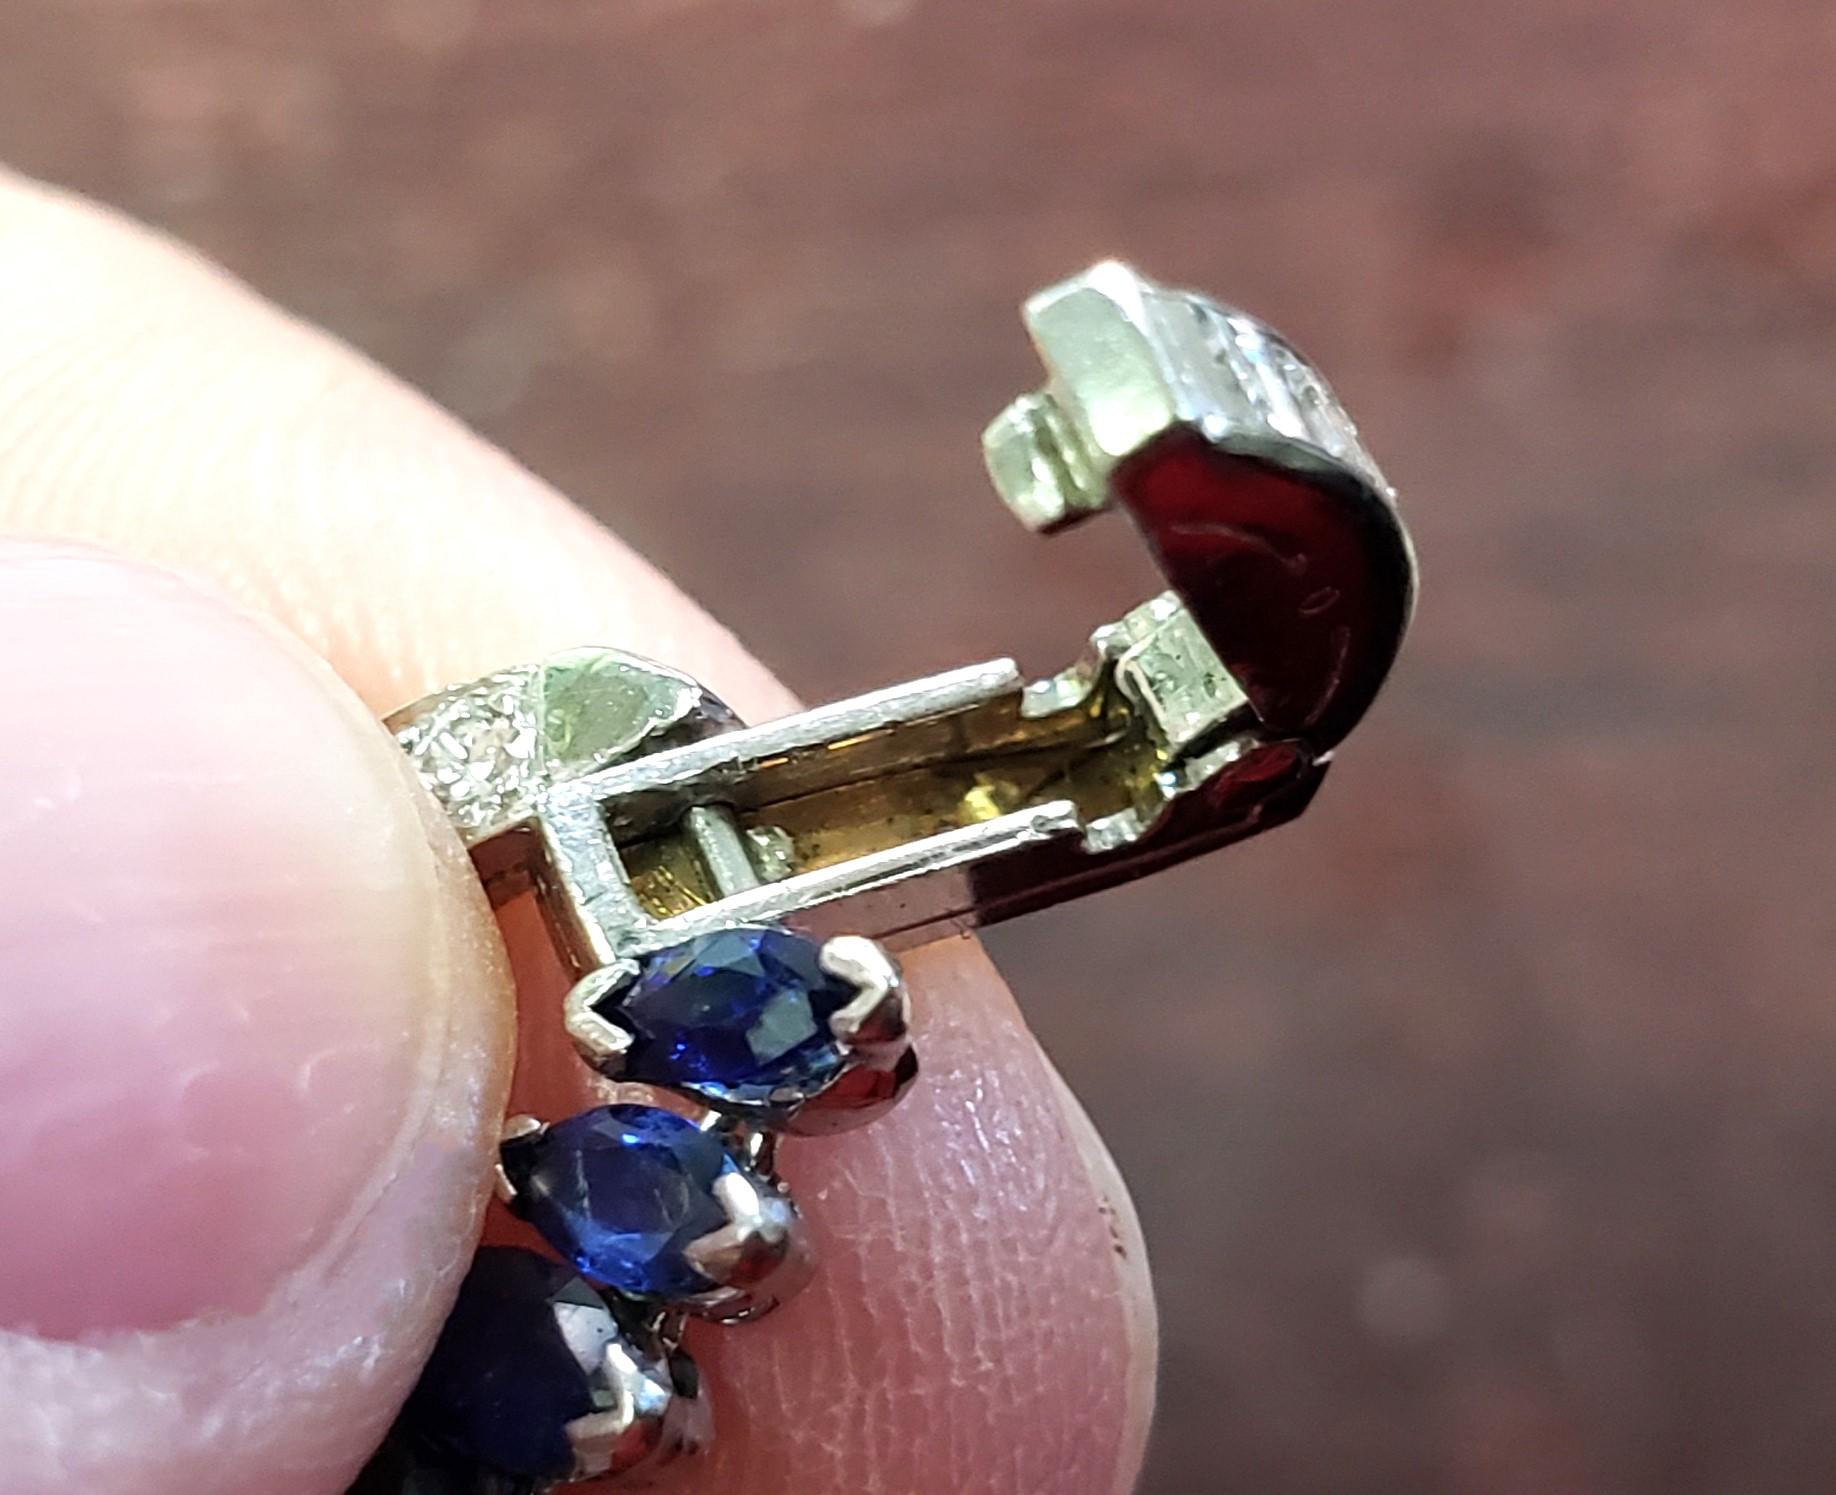 Oscar Heyman Sapphire & Diamond bracelet 7